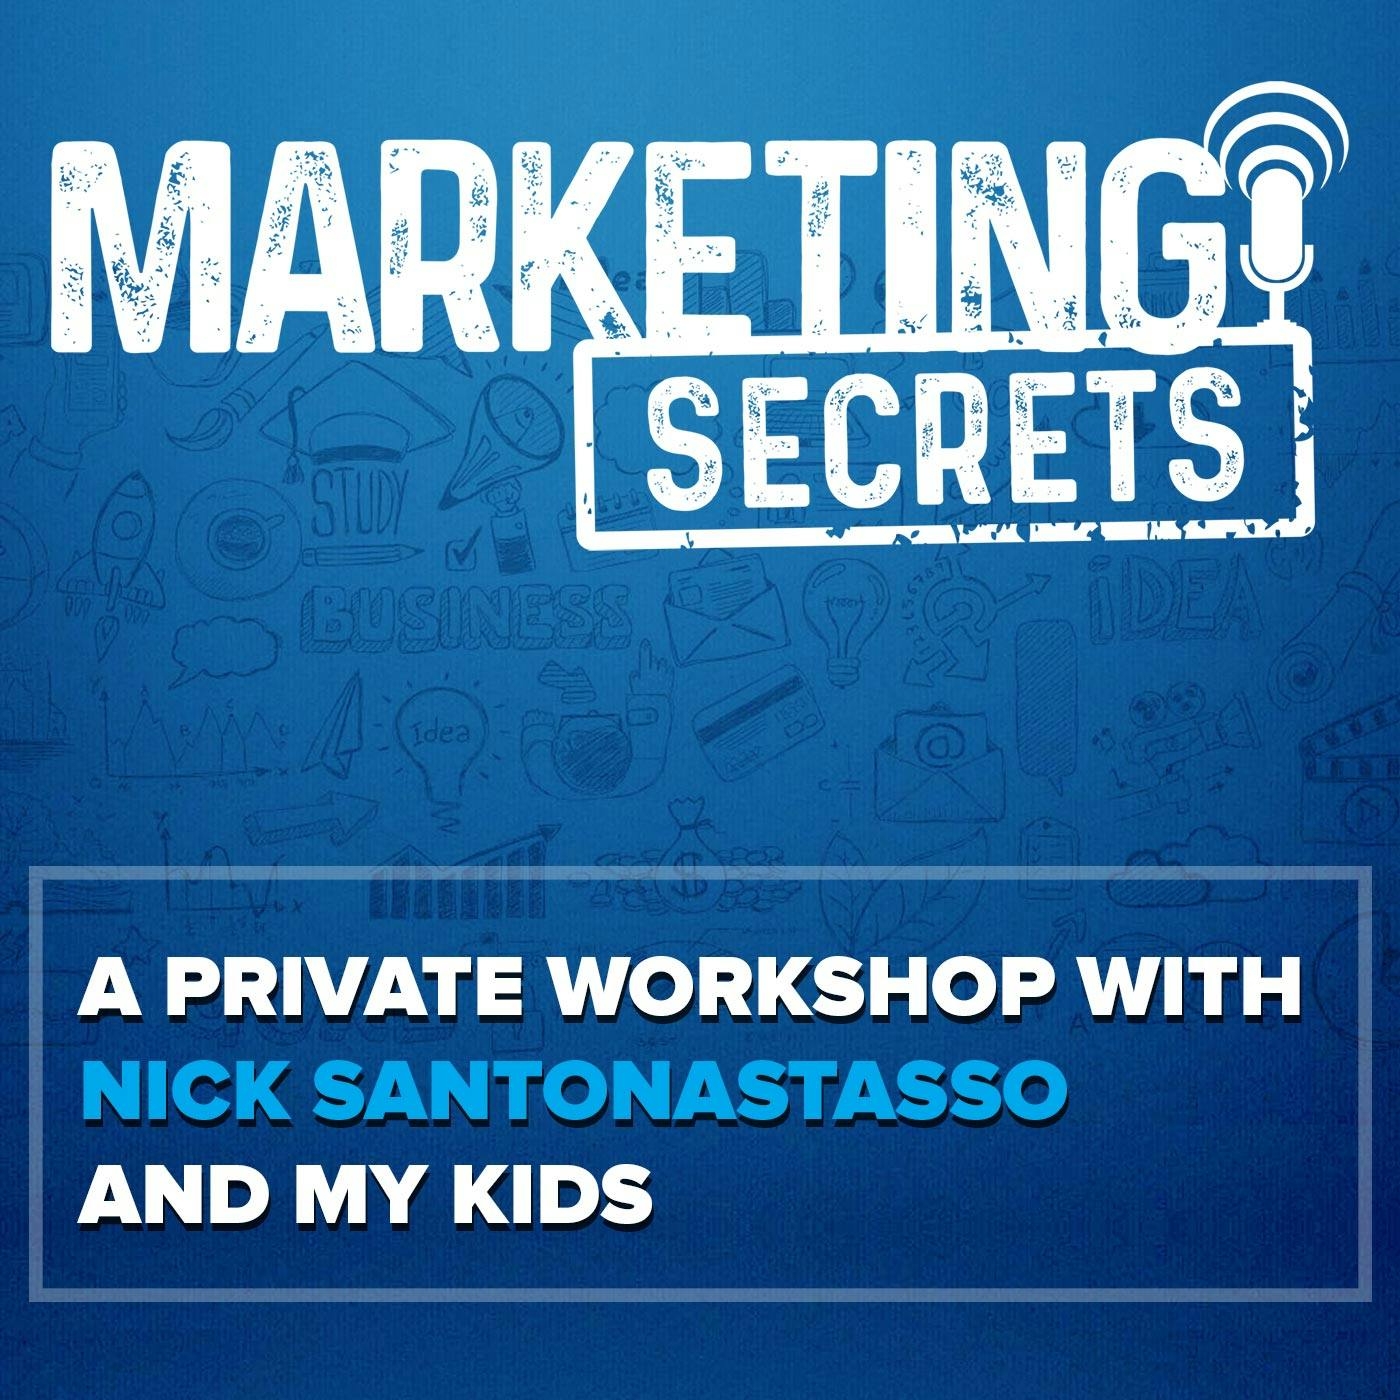 A Private Workshop With Nick Santonastasso And My Kids